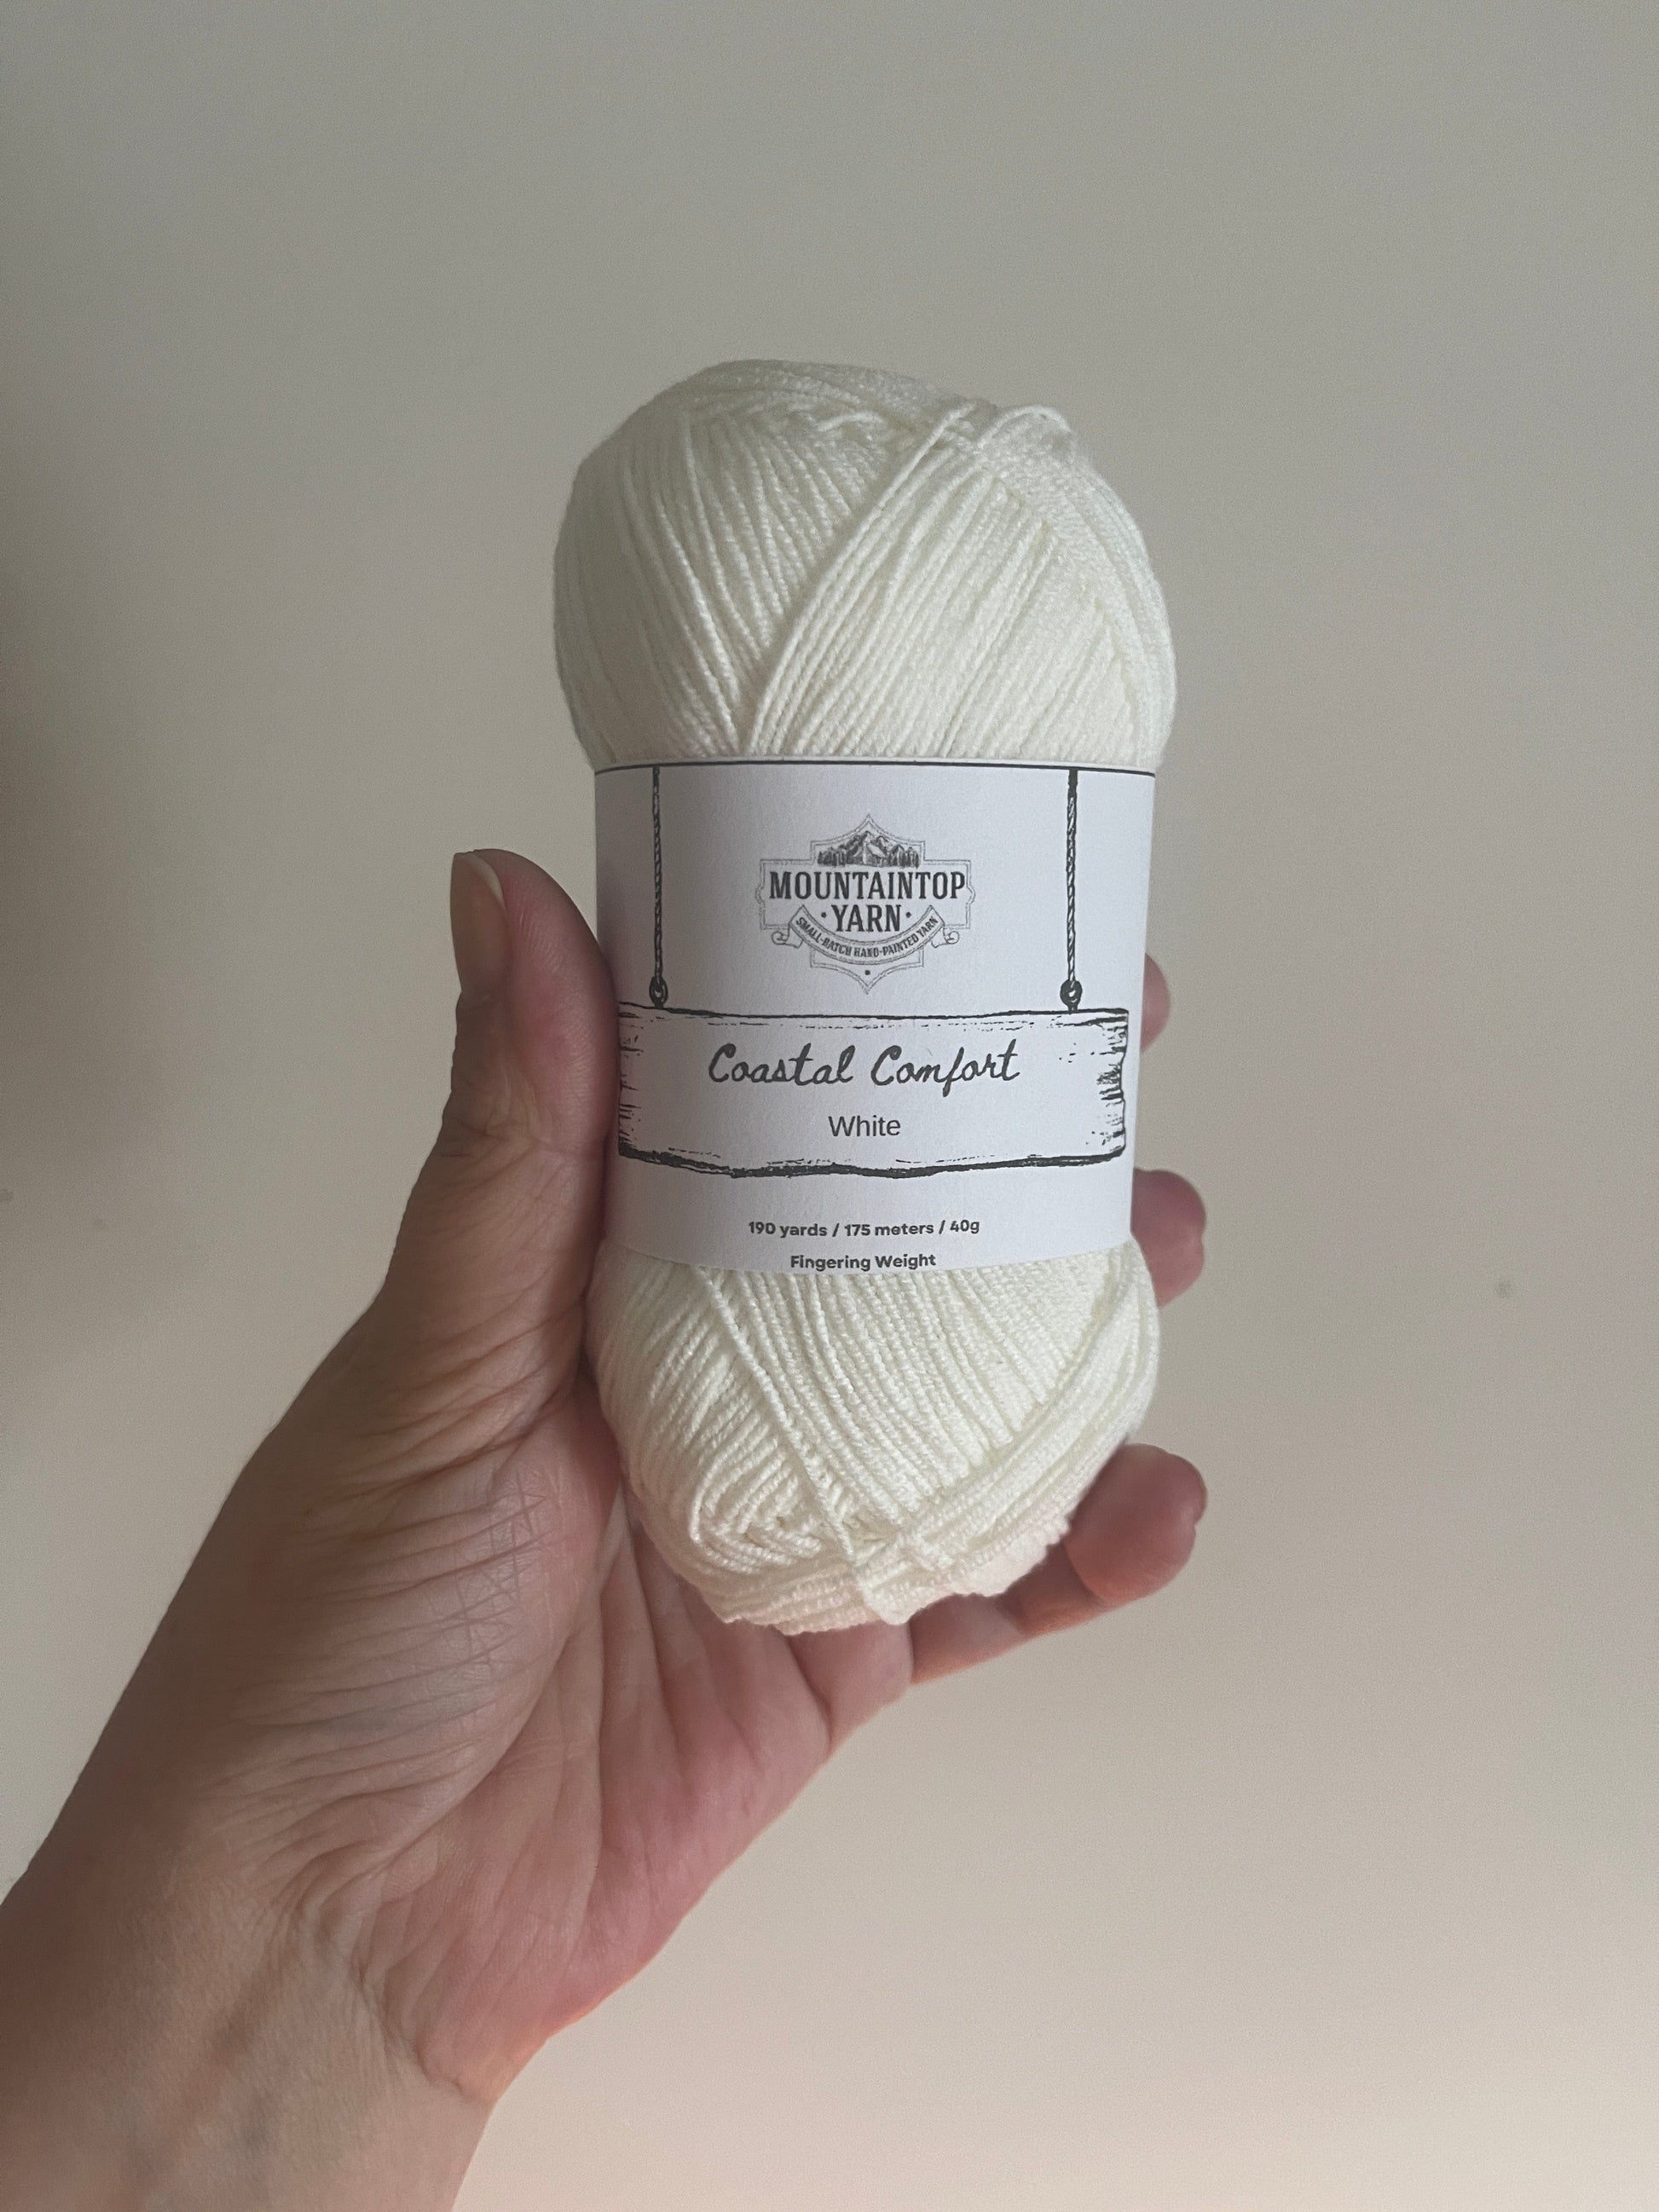 Mountaintop Yarn White Coastal Comfort - Cotton and Acrylic Blend Yarn Yarn